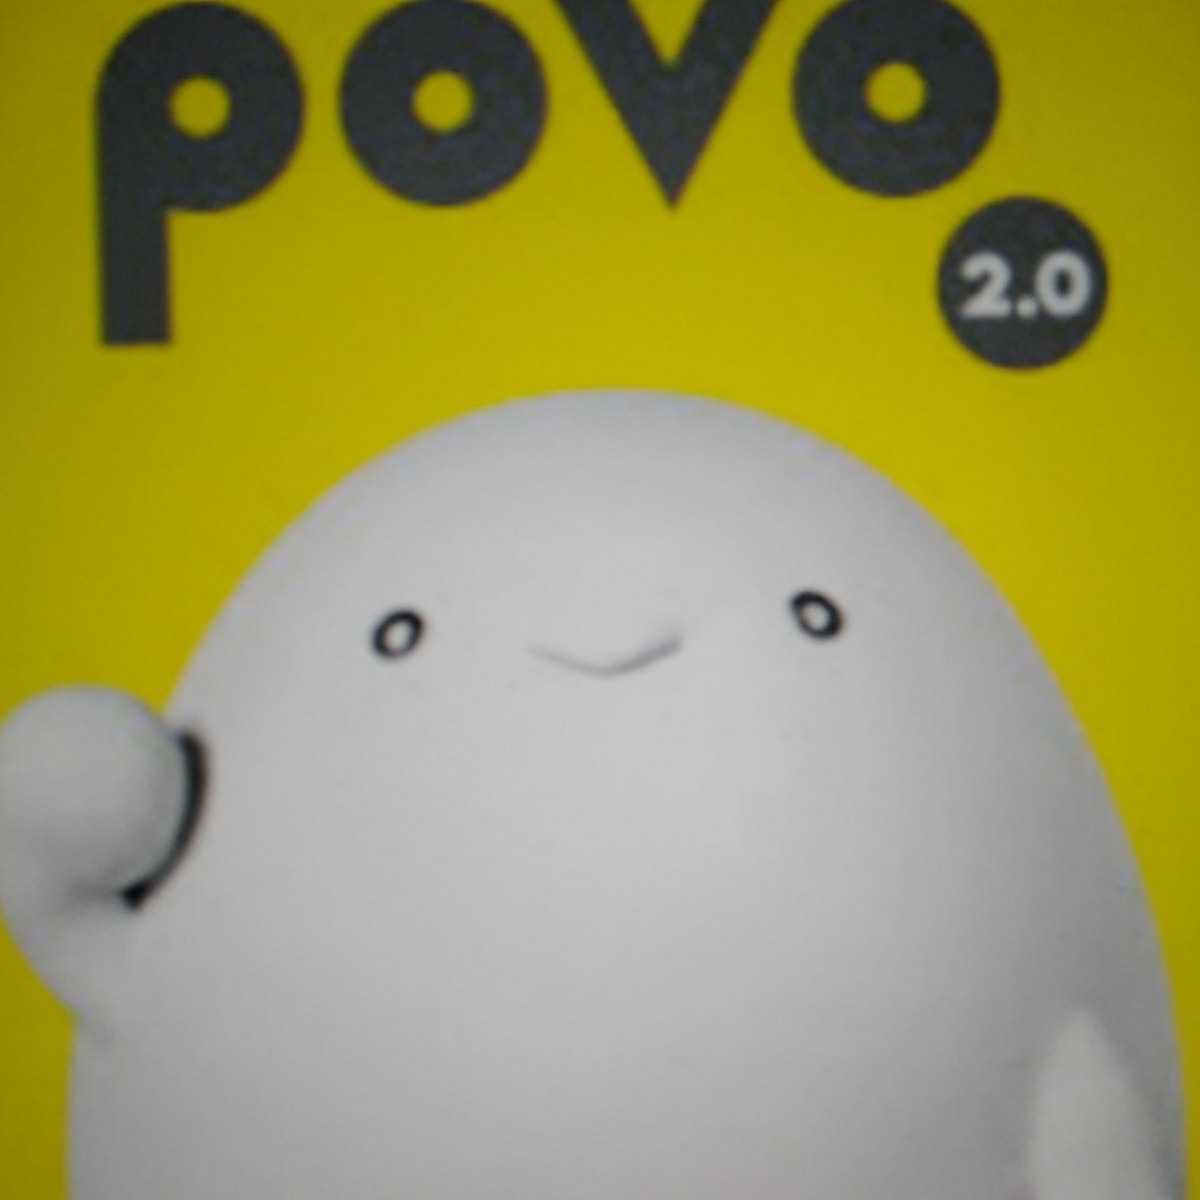 POVO 2.0 プロモコード 300MB 登録期限5月15日の画像1